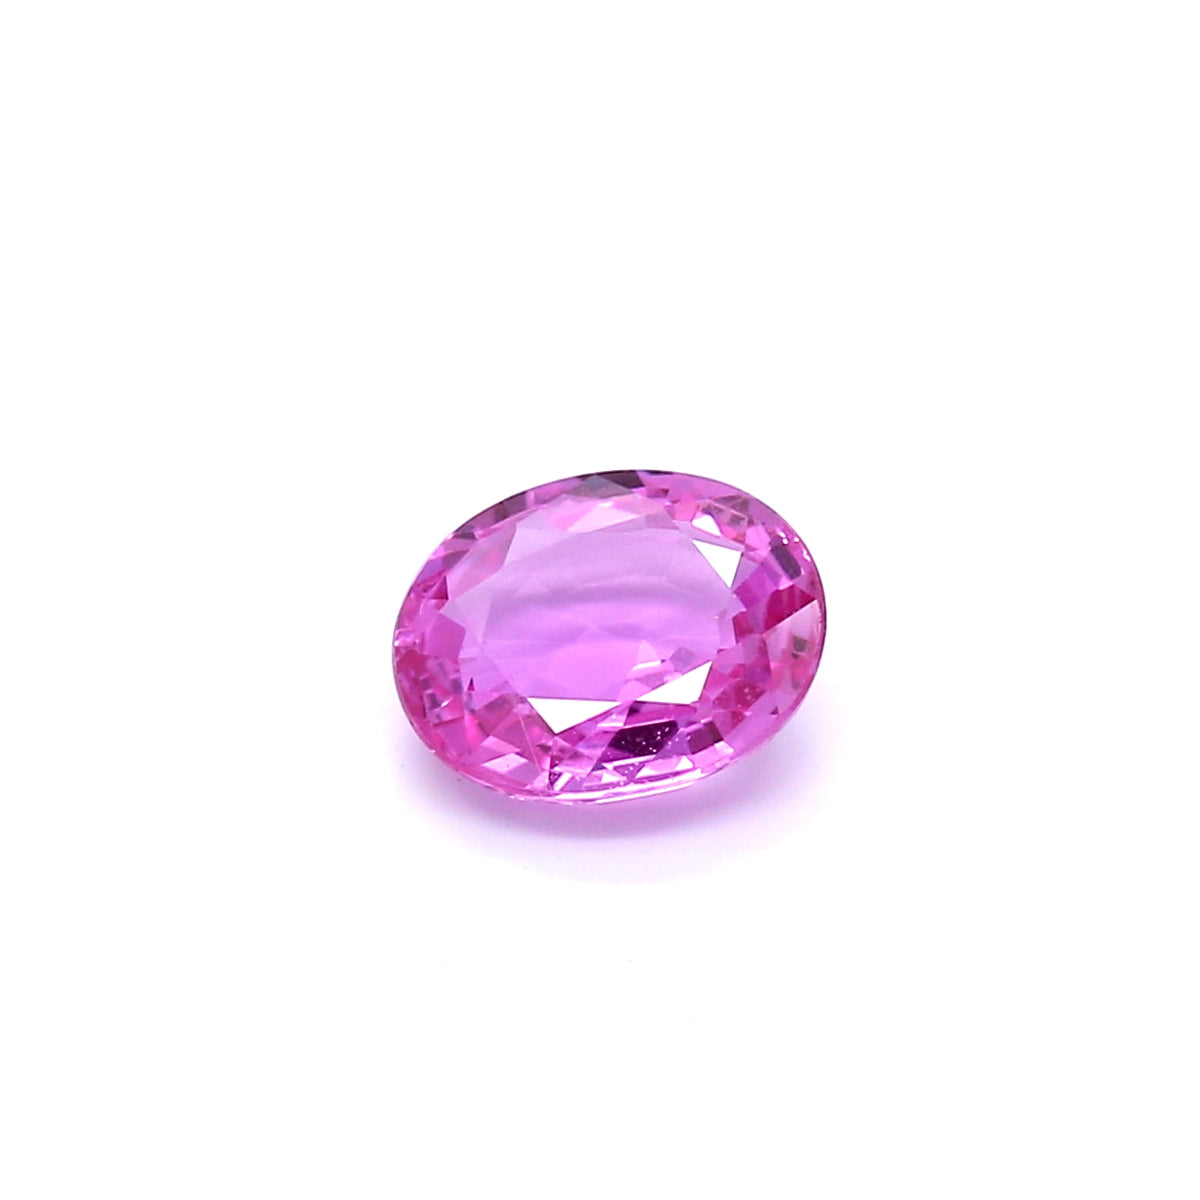 1.48ct Pink, Oval Sapphire, Heated, Madagascar - 7.62 x 6.25 x 3.14mm